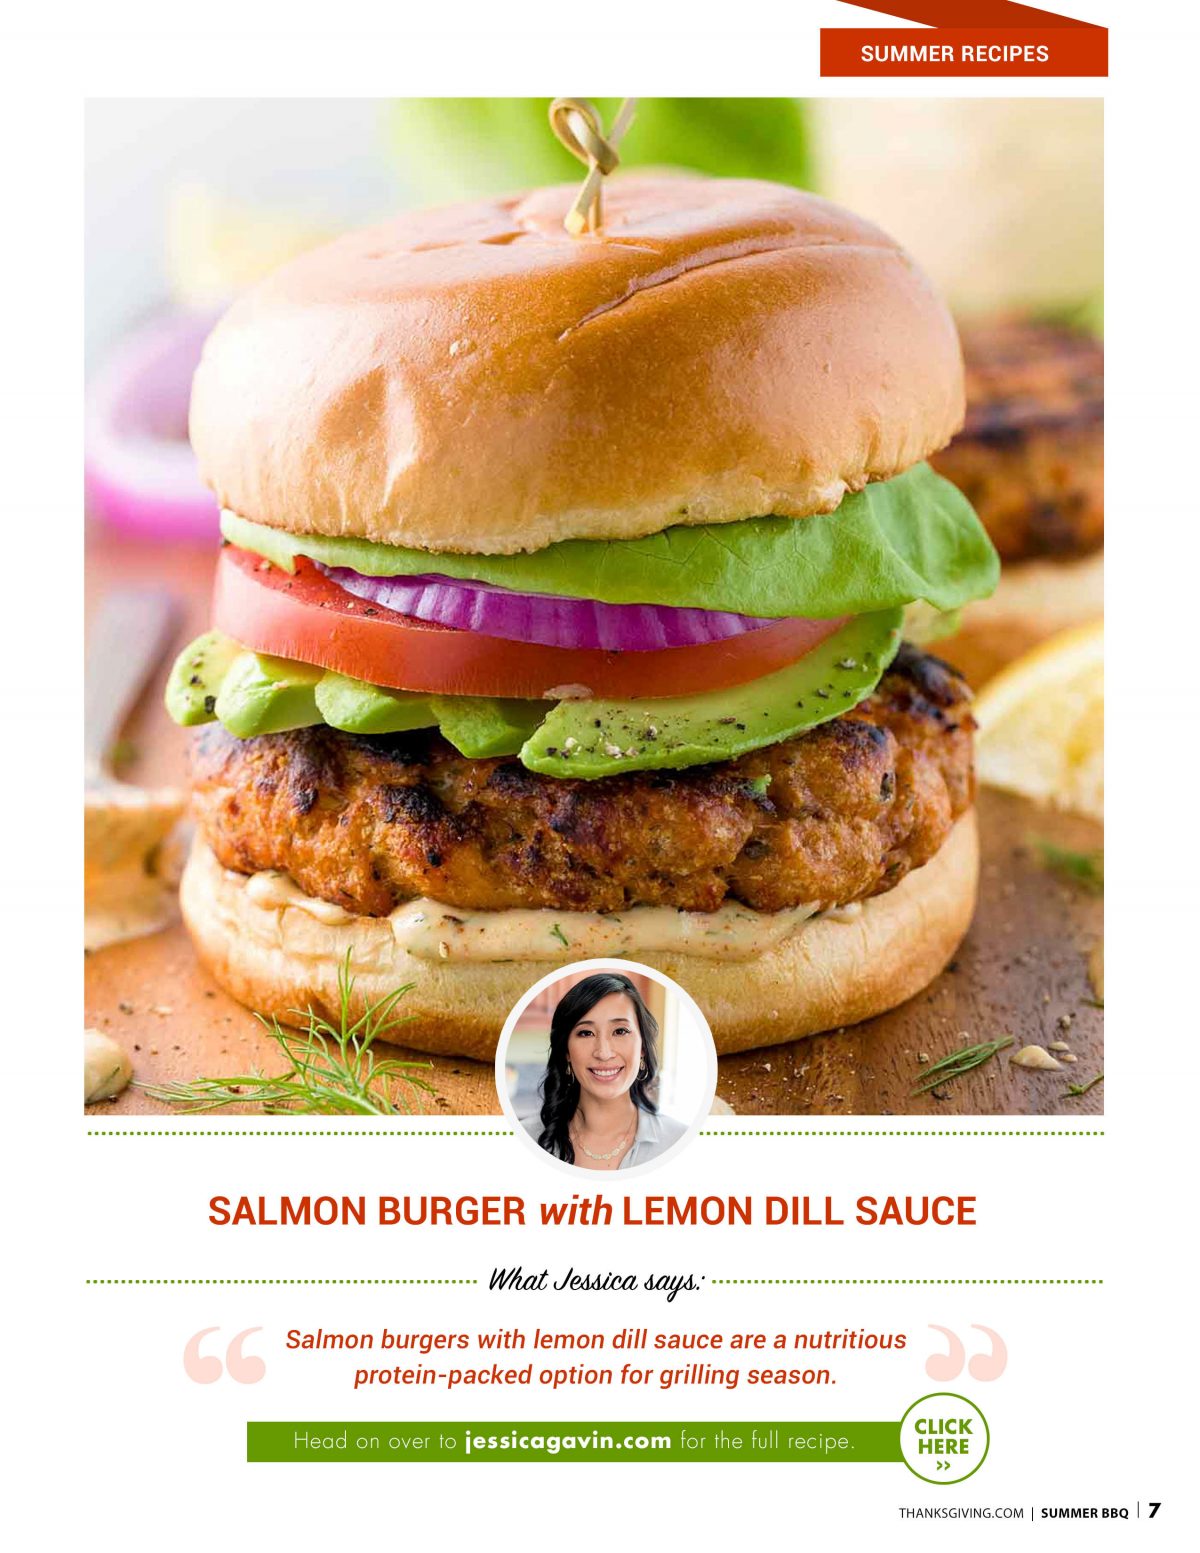 Salmon burgers with lemon dill sauce